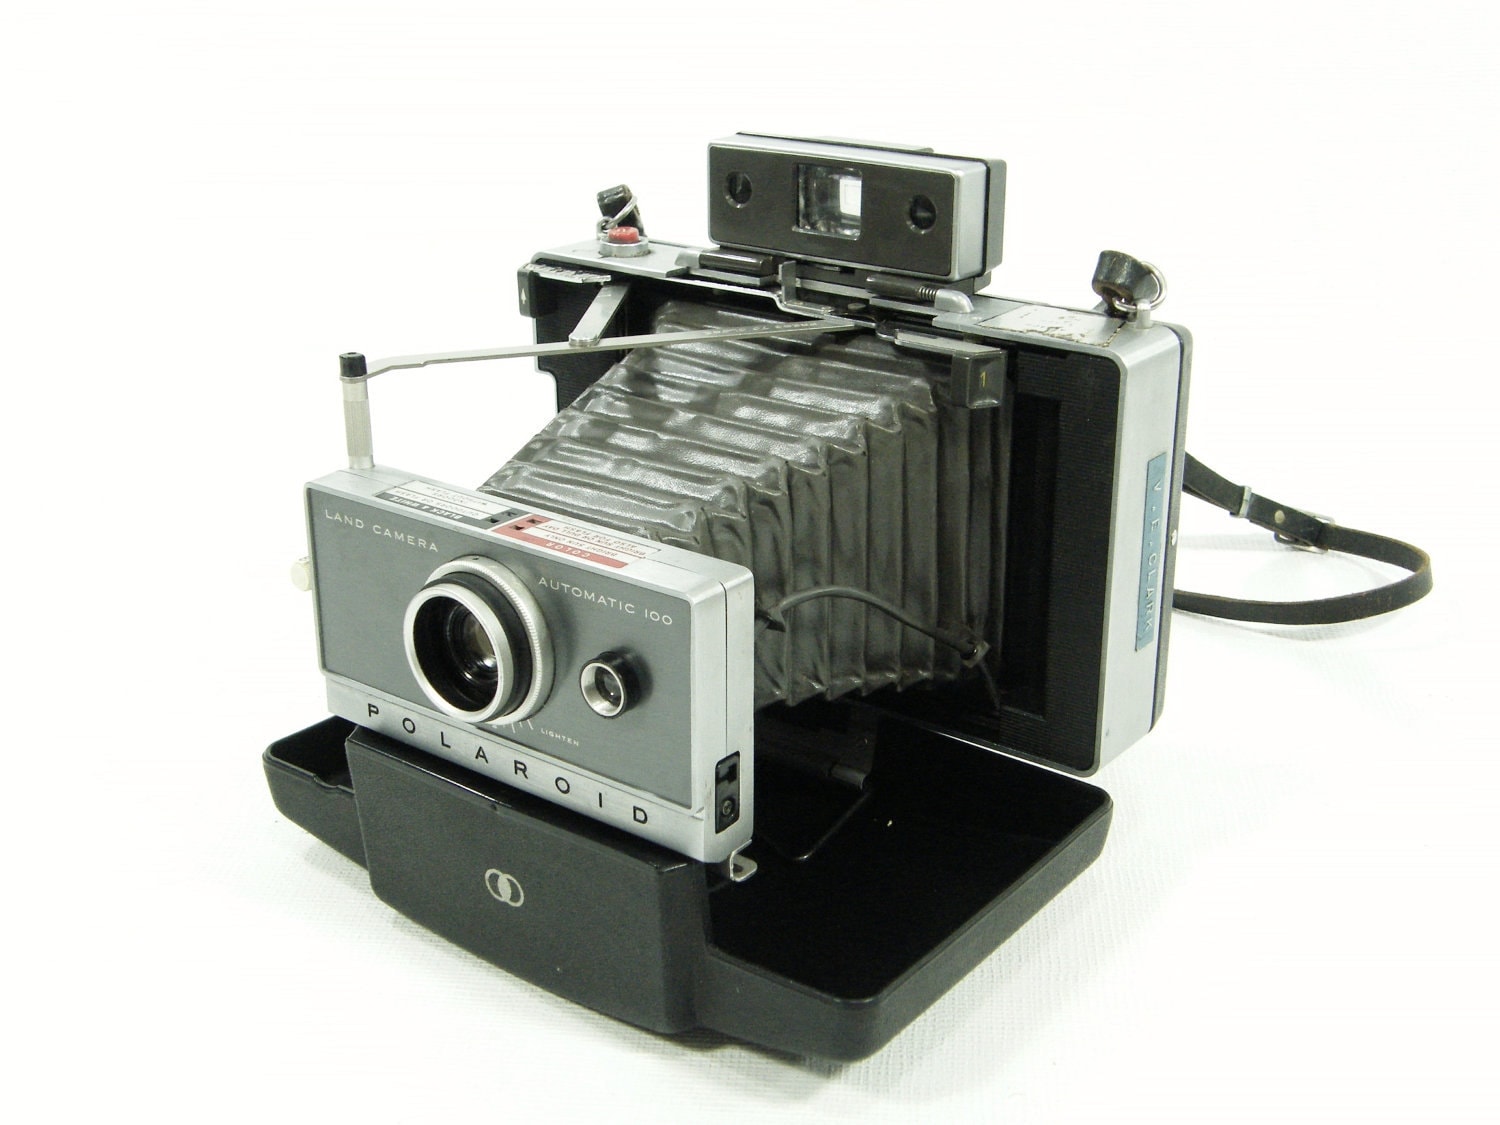 Polaroid Land Camera Vintage model 100